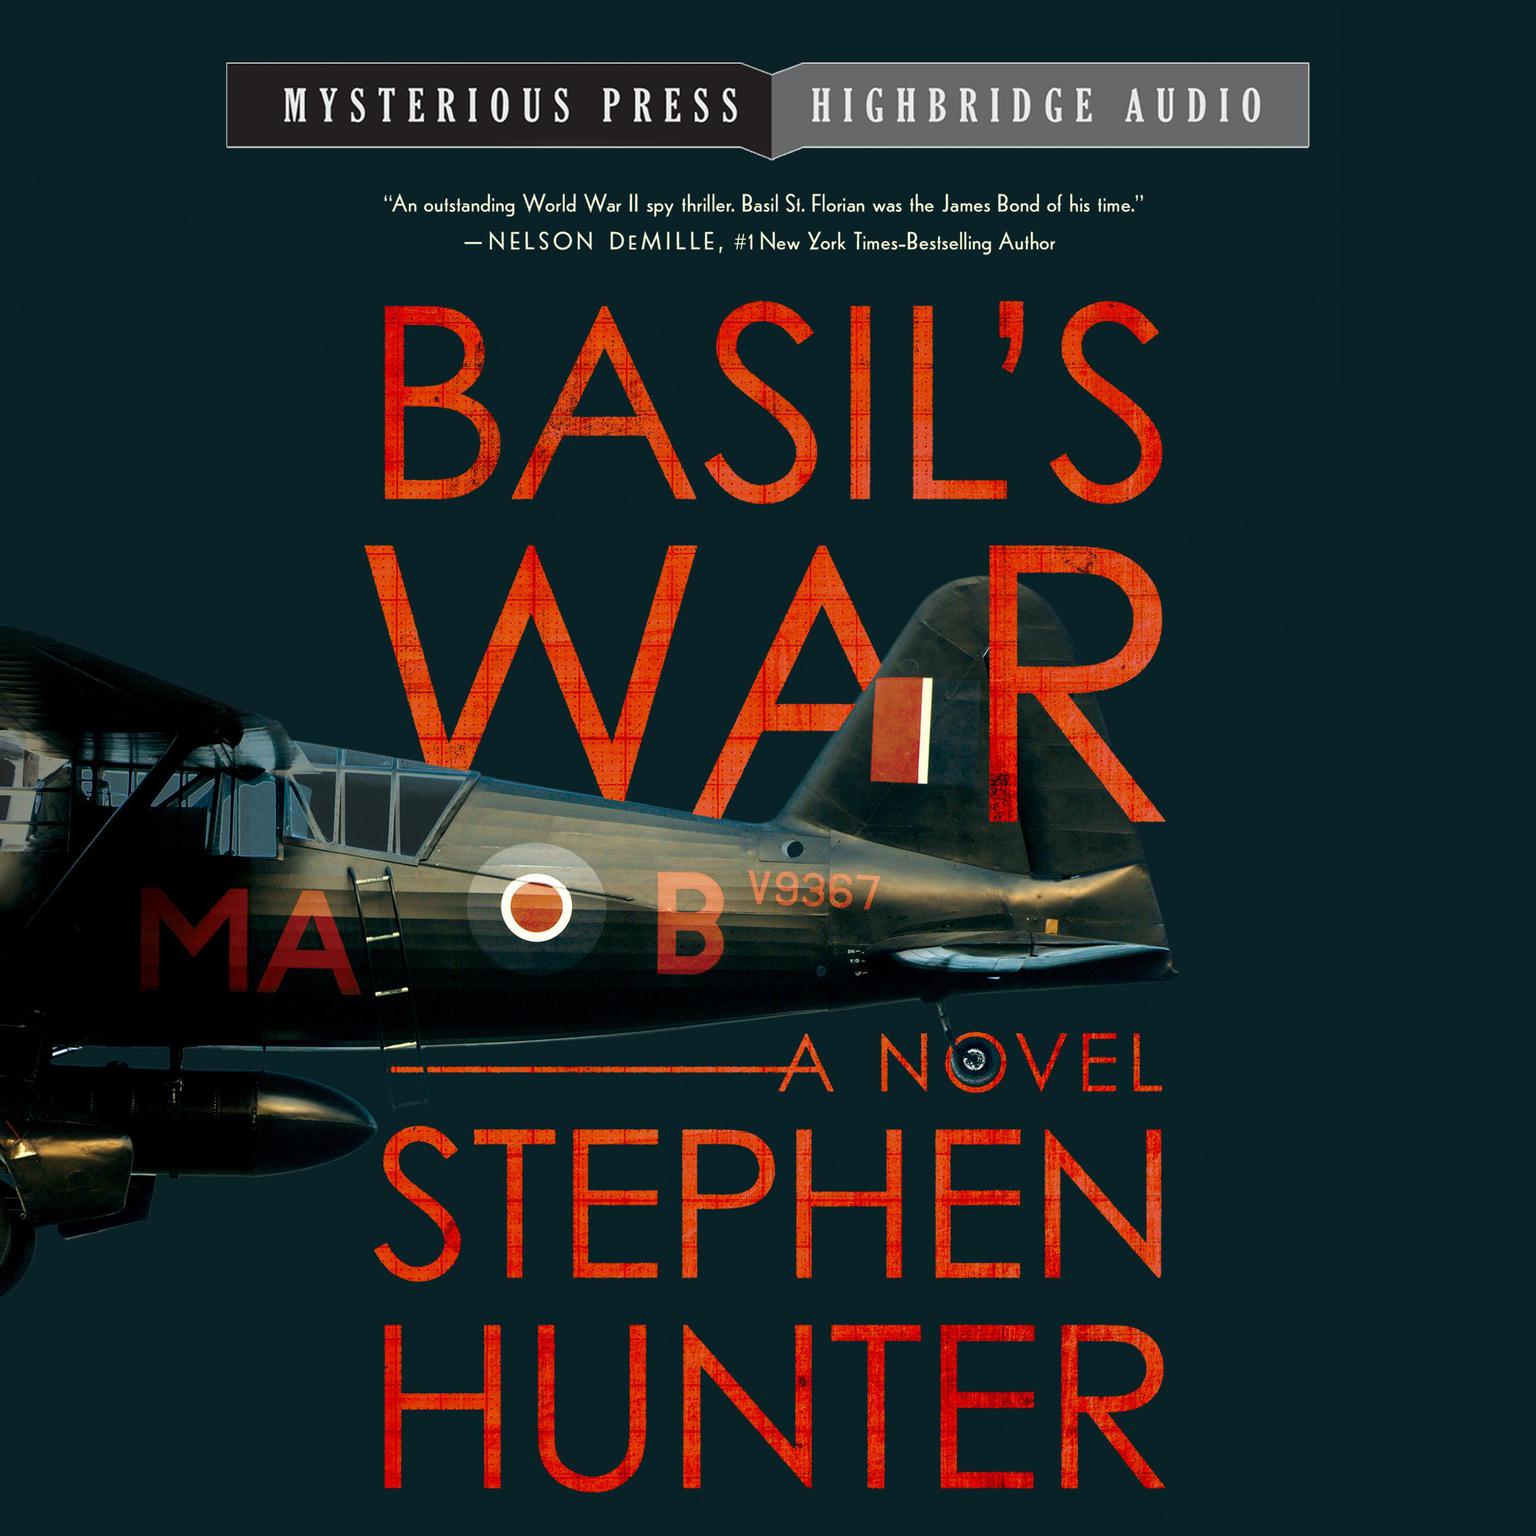 Basils War Audiobook, by Stephen Hunter